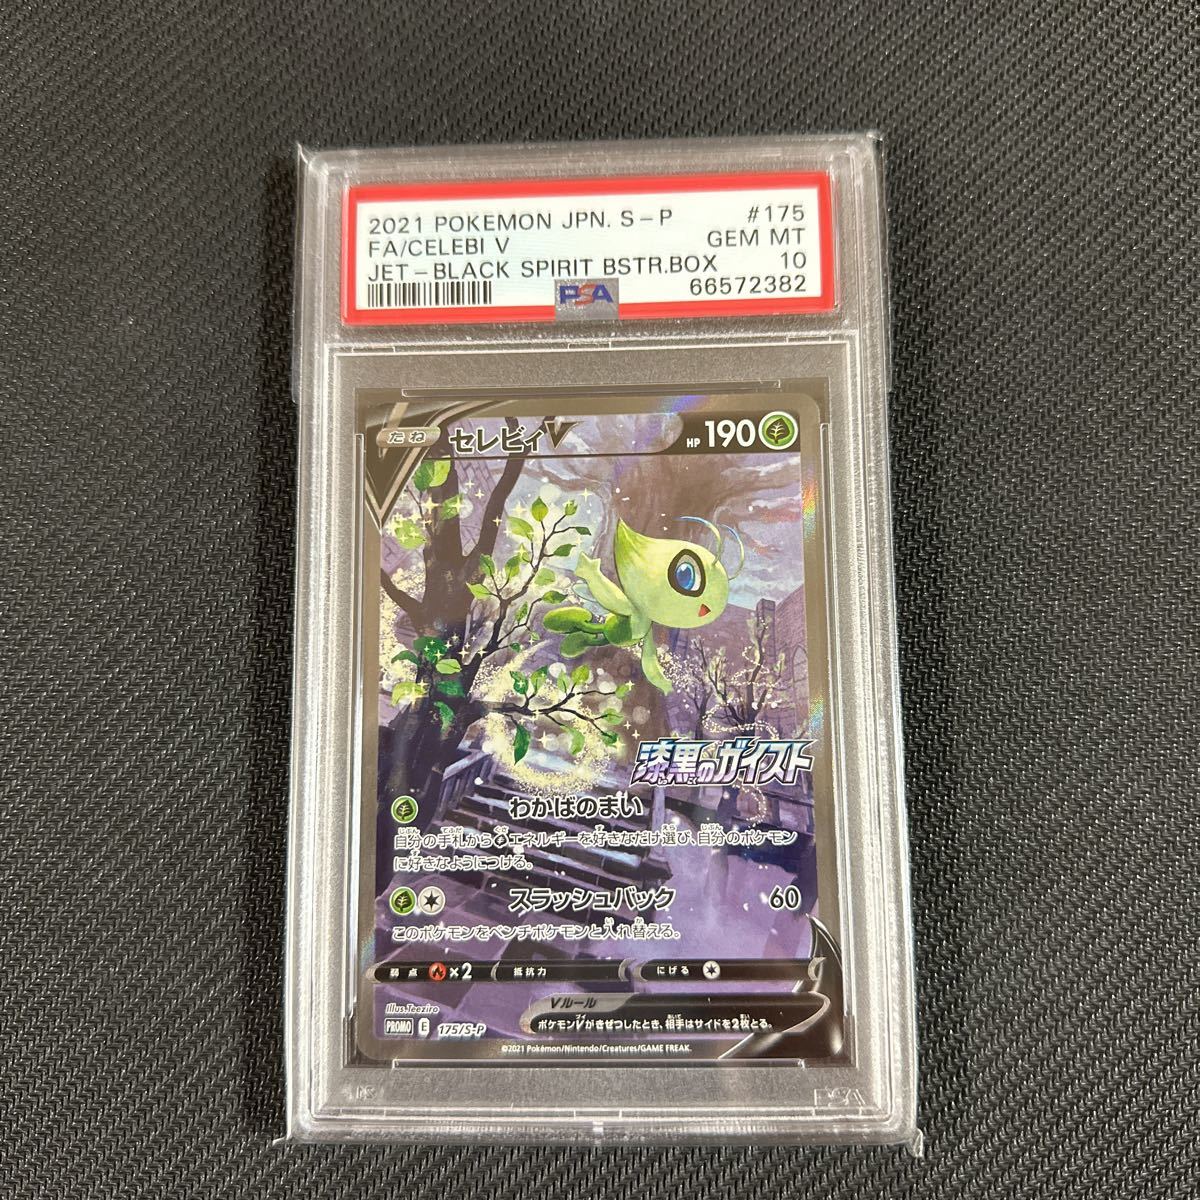 PSA10 ポケモンカード セレビィV プロモ SR pokemon card GEM MT 10 